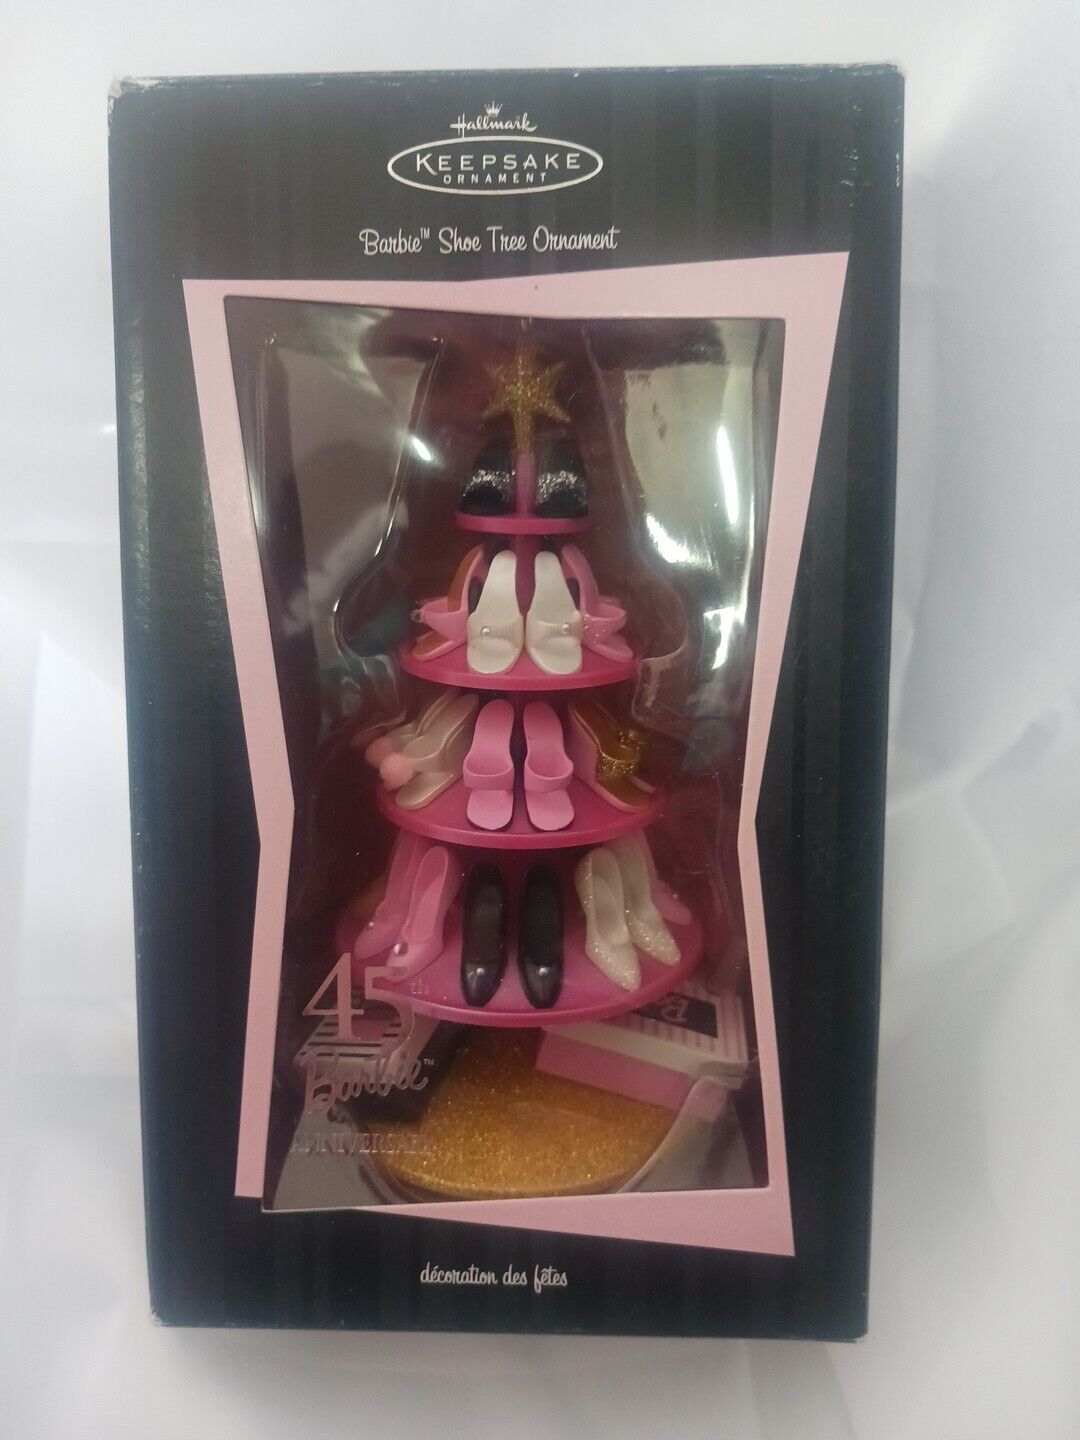 Barbie Shoe Tree Christmas Ornament 2004 Hallmark Keepsake 45th Anniversary NOB